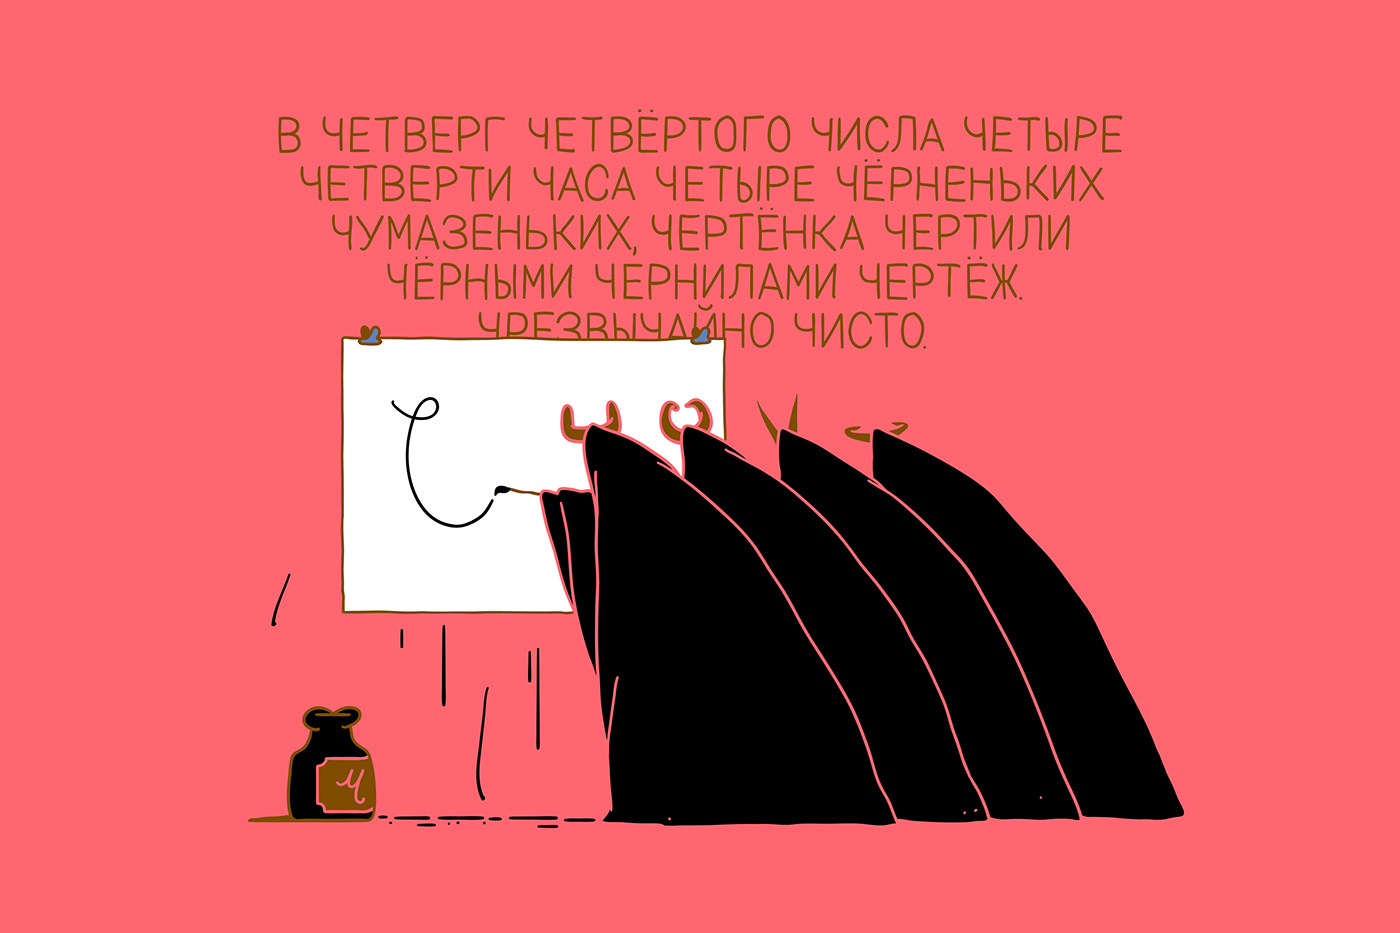 Cyrillic cyrillic typography handdrawn Editorial Illustration minimal illustration corporate illustration branded illustration Soviet ussr